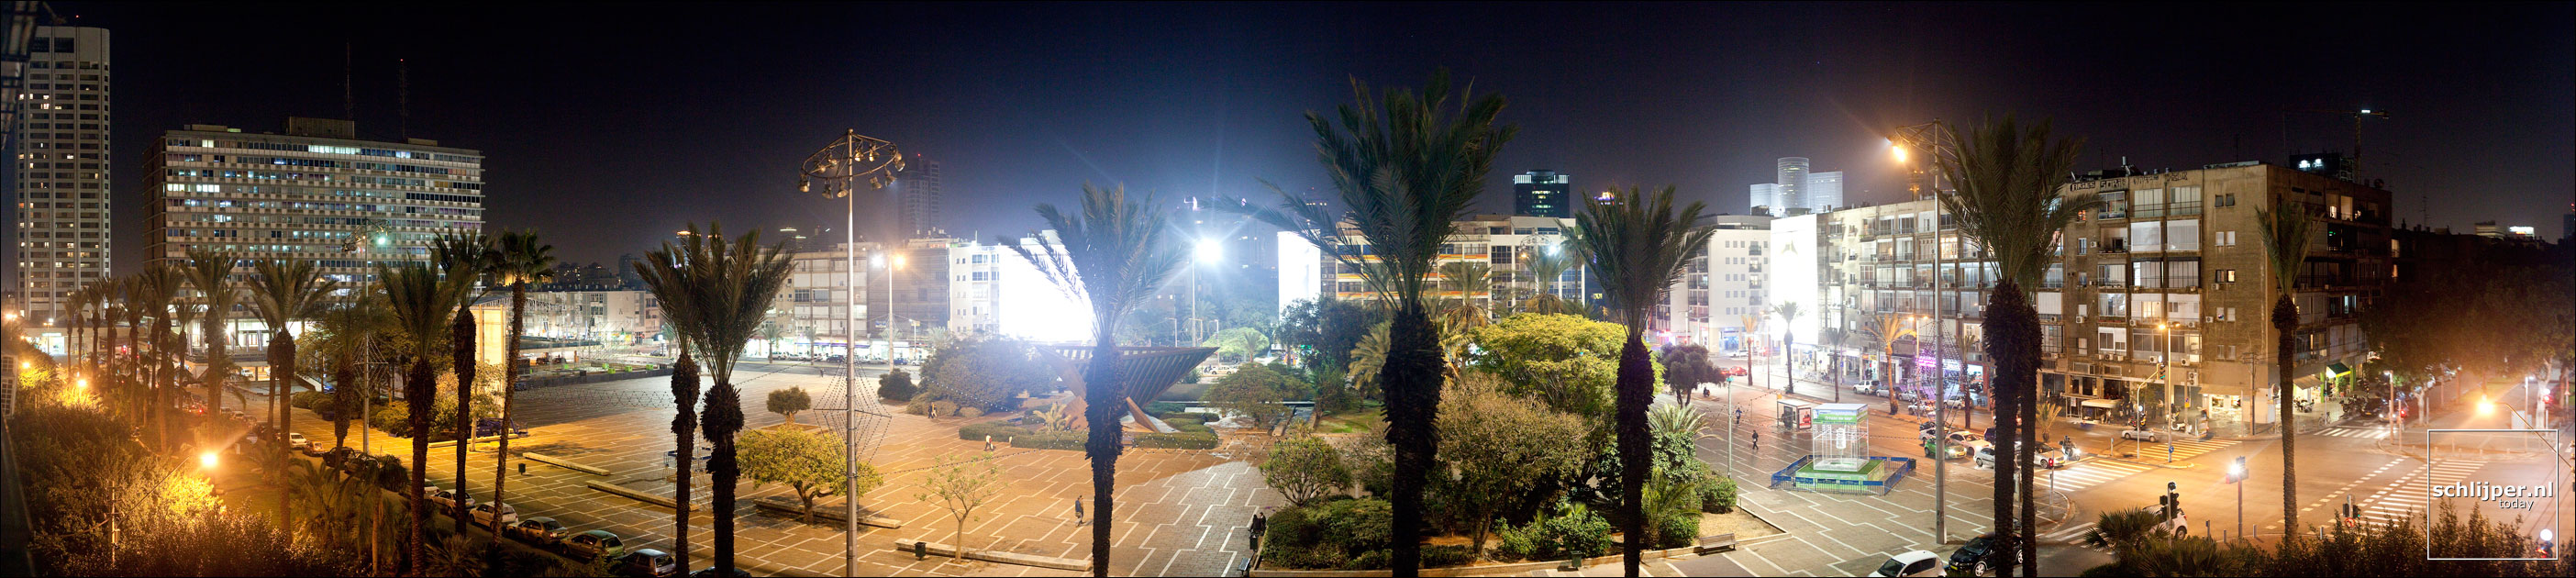 Israel, Tel Aviv, 5 november 2009